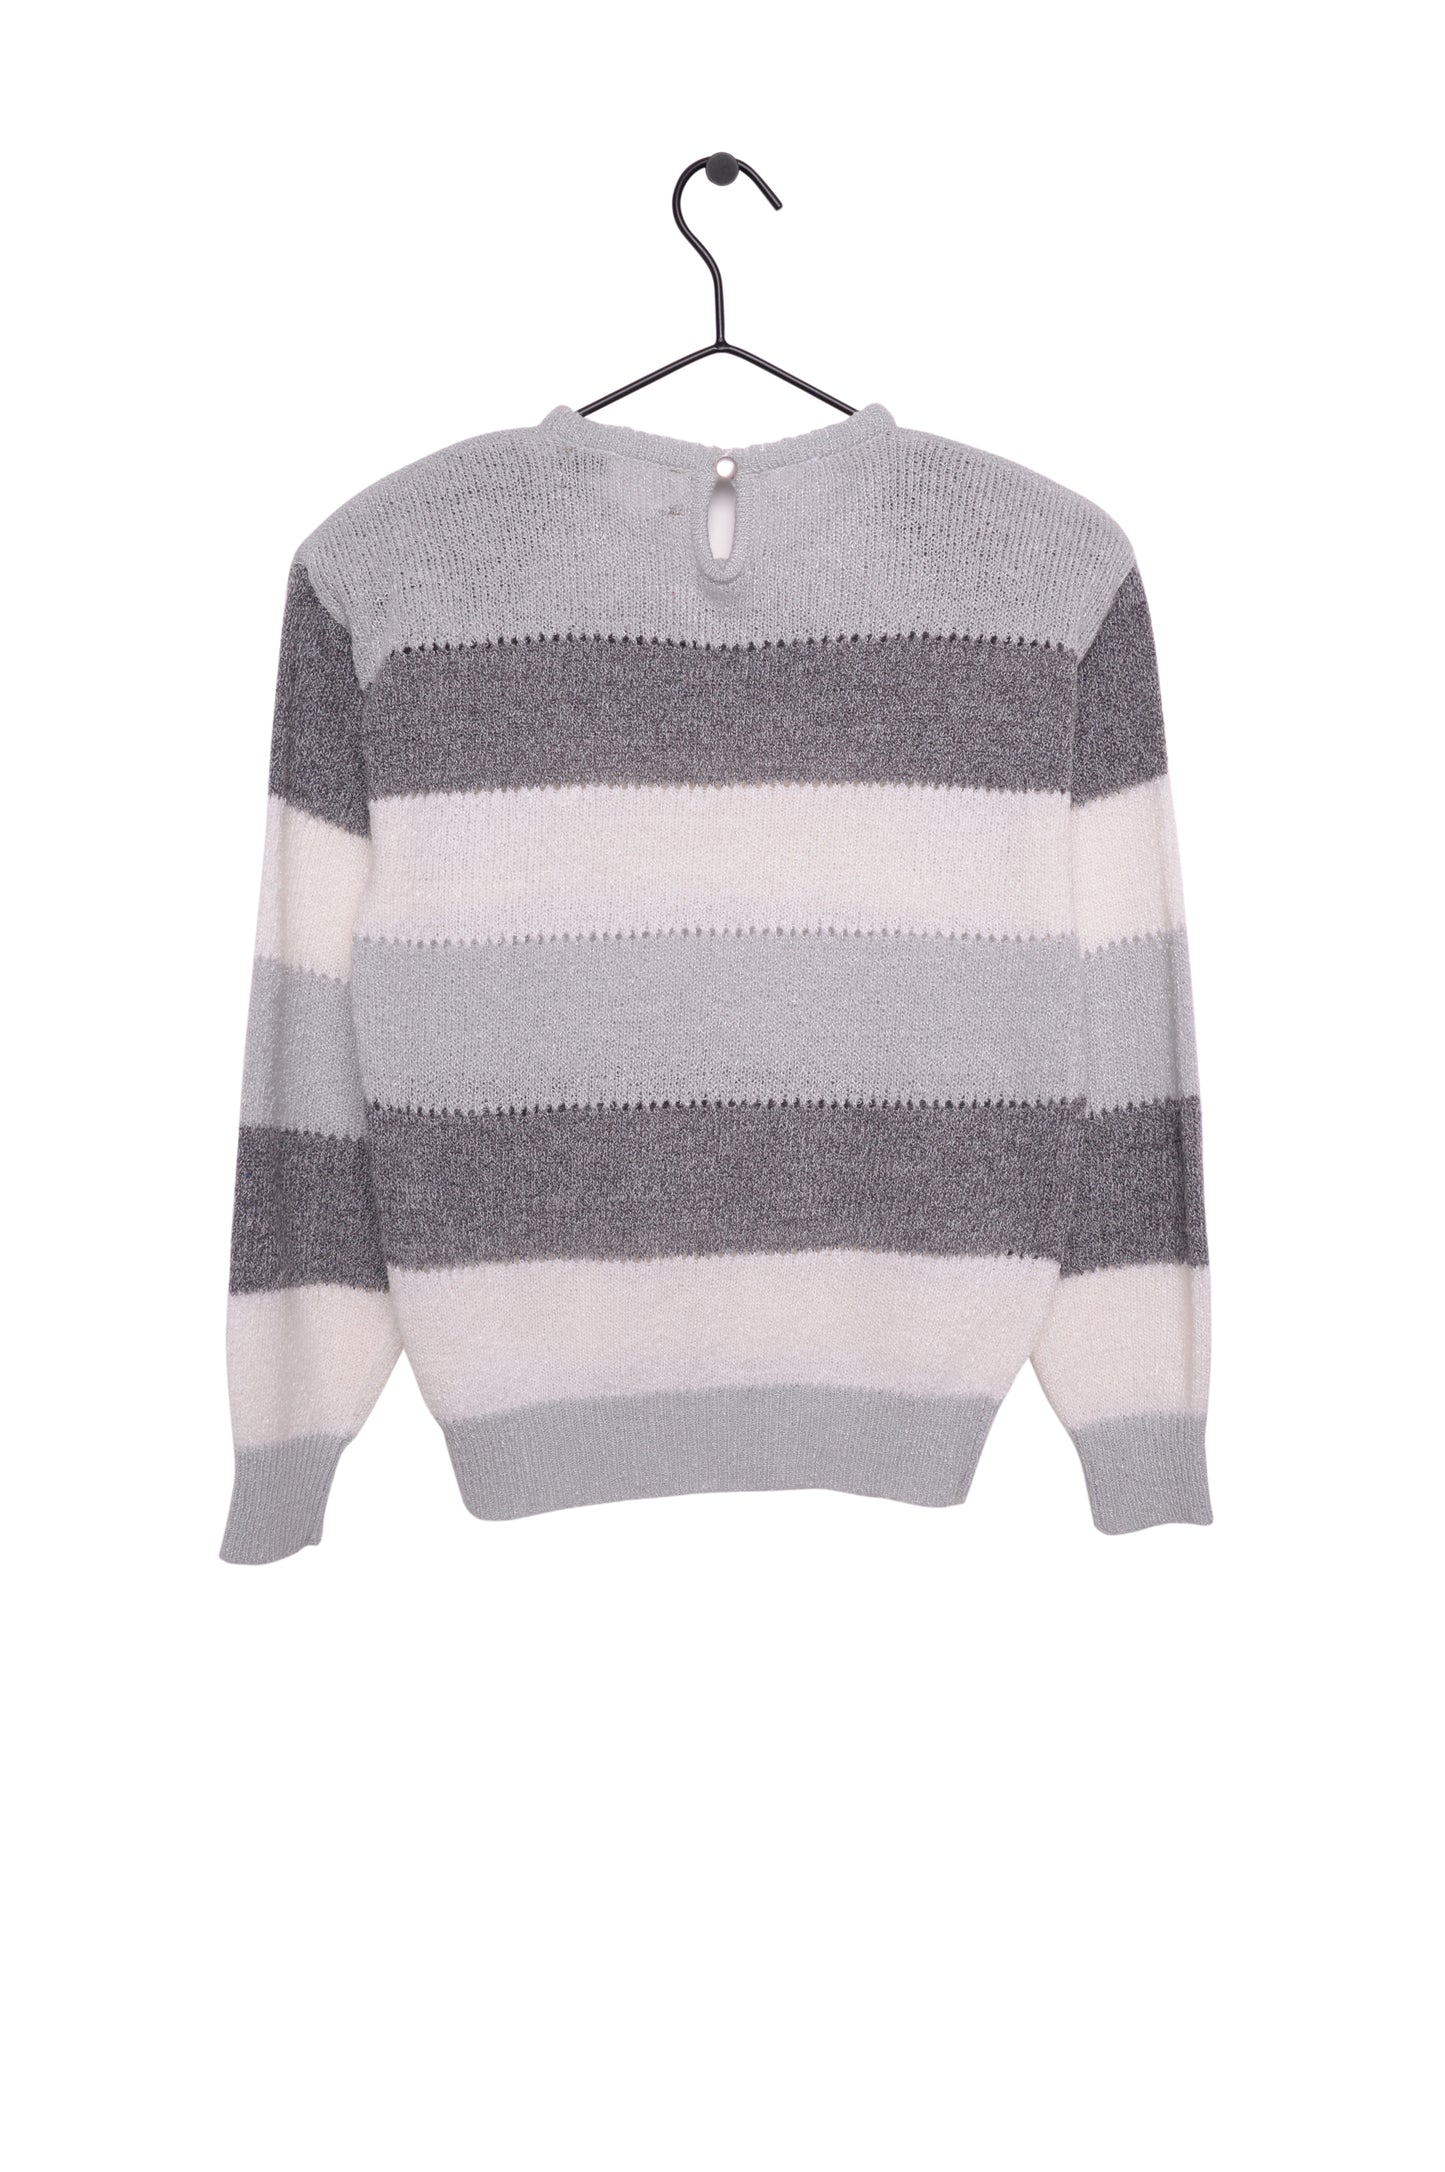 1980s Grayscale Stripe Sweater